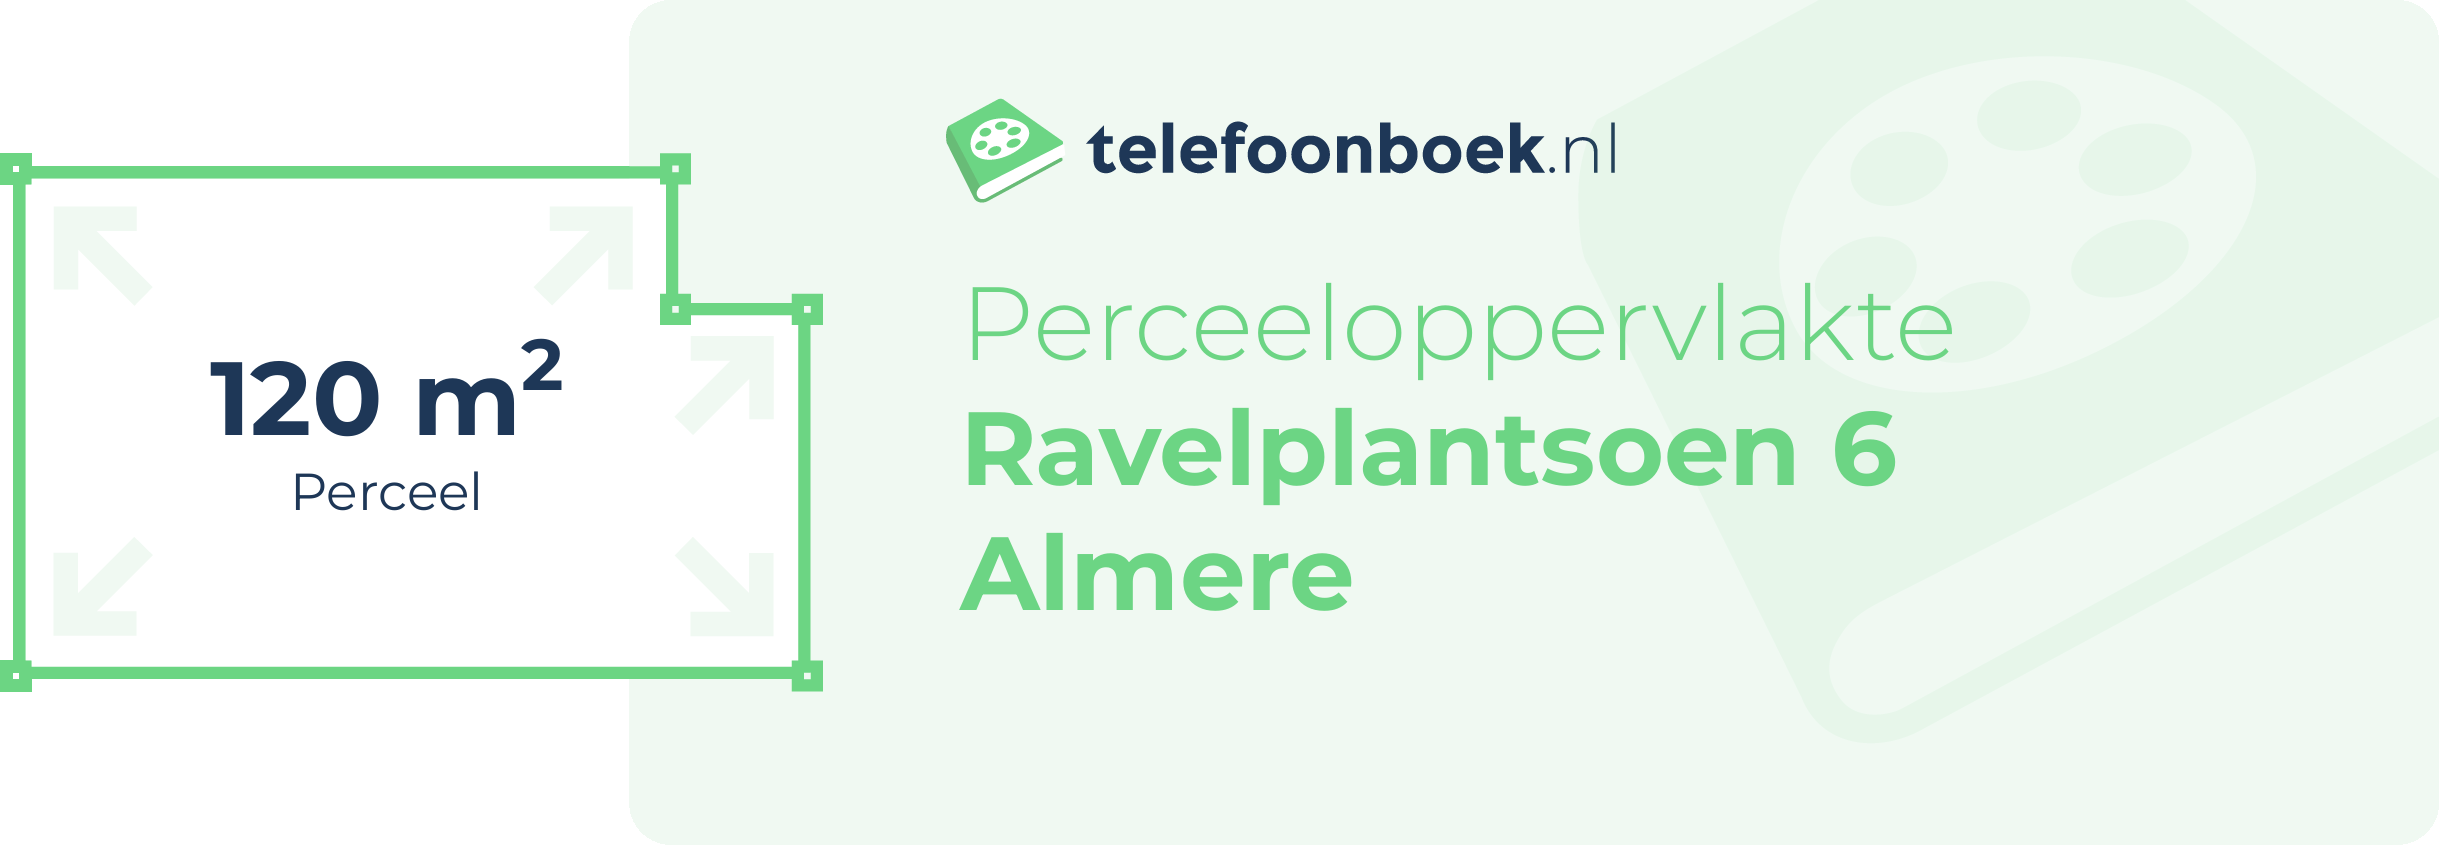 Perceeloppervlakte Ravelplantsoen 6 Almere